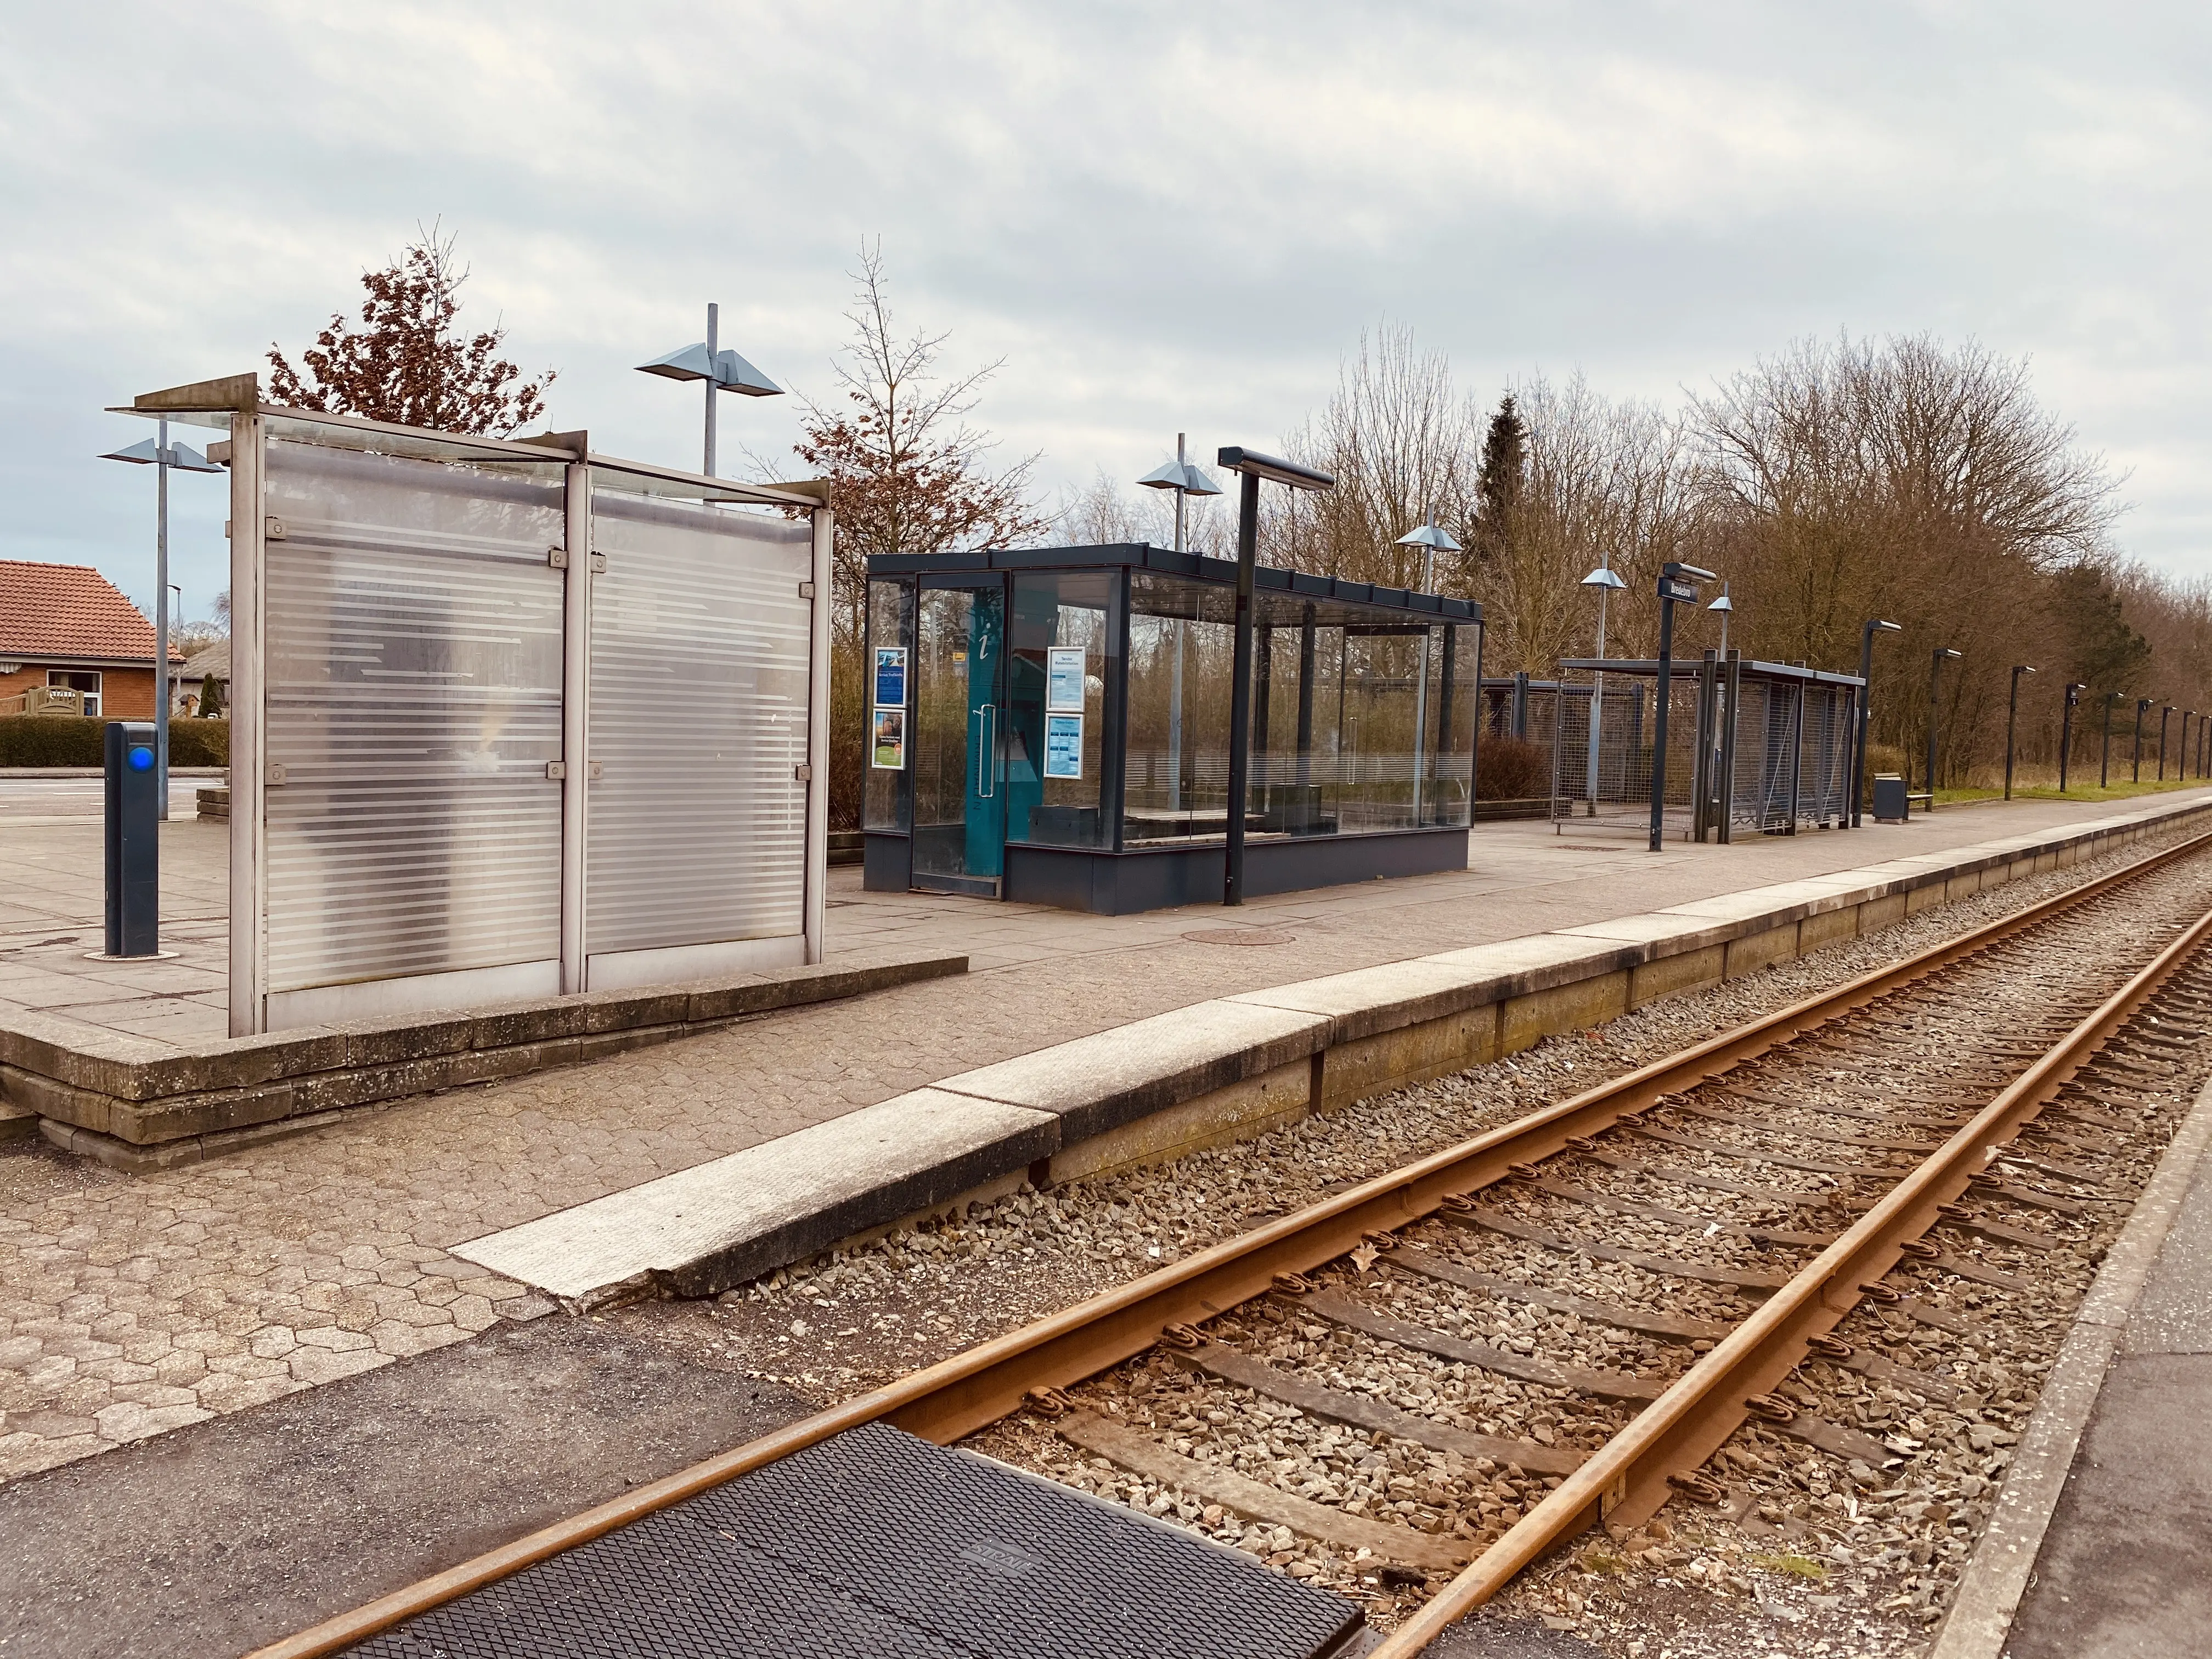 Bredebro Station.